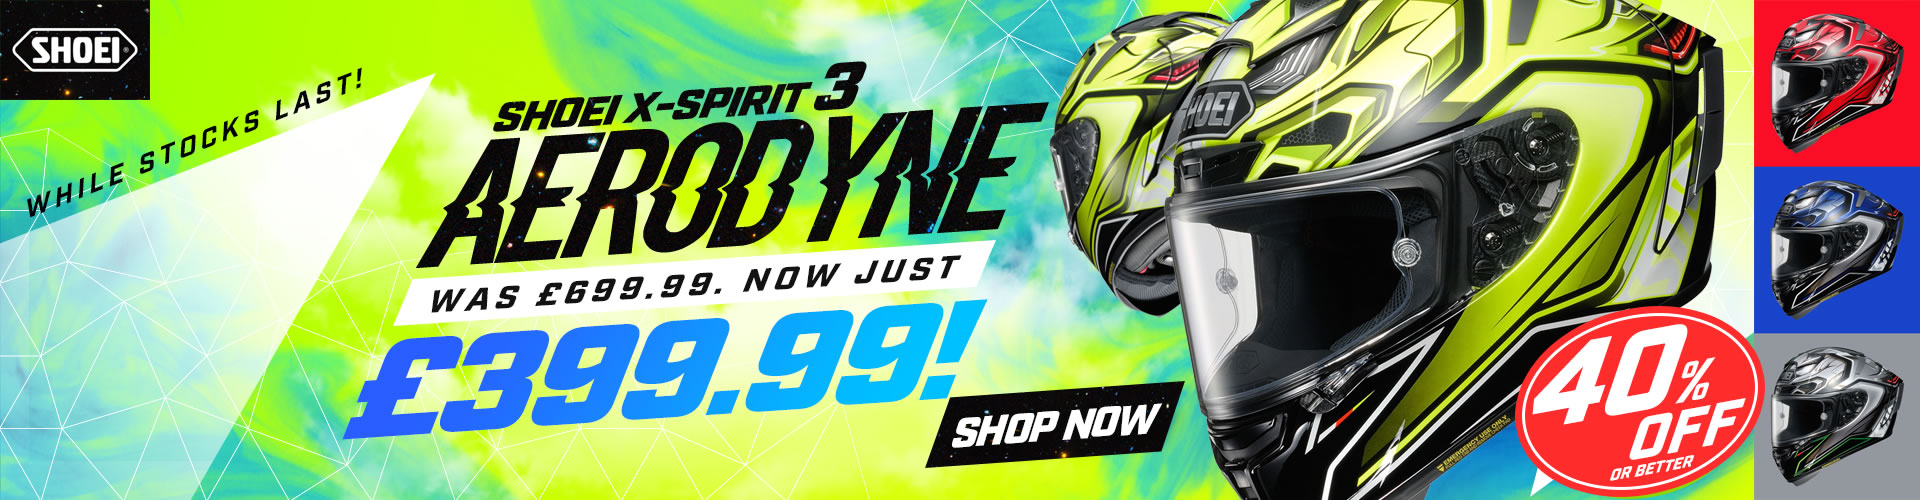 Shoei X-SPIRIT 3 Aerodyne now on SALE!